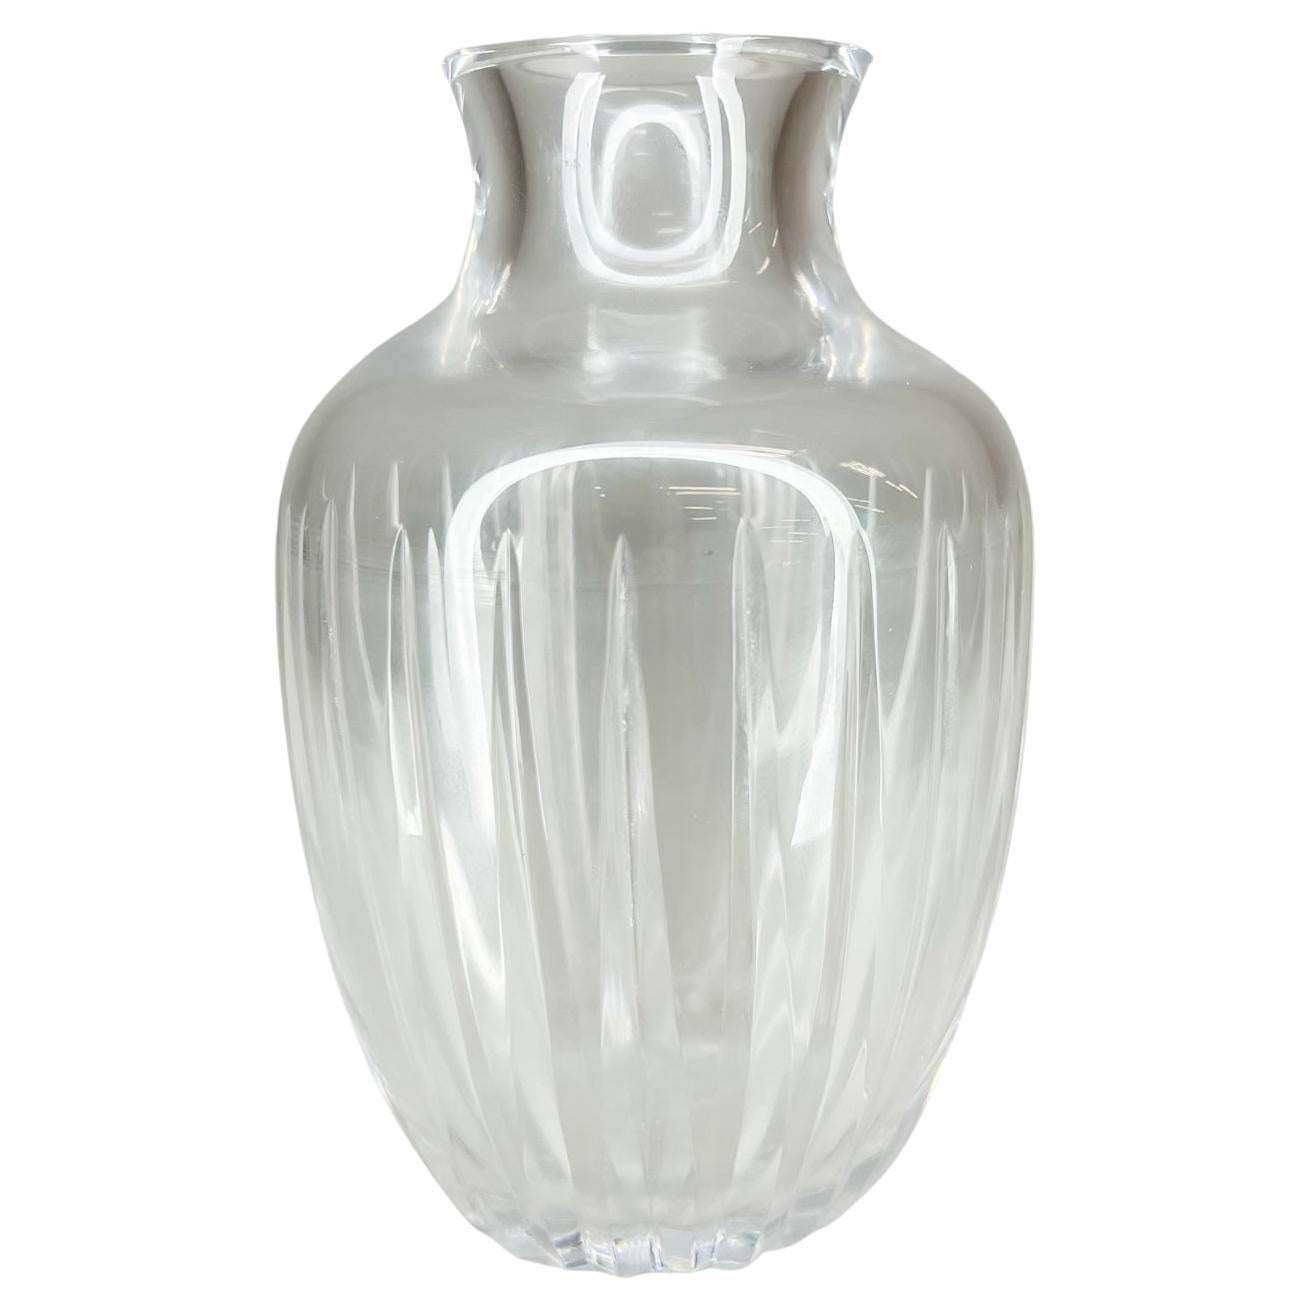 1980s Postmodern Petite Vase Sculptural Glass Clean Lines Ribbed Design